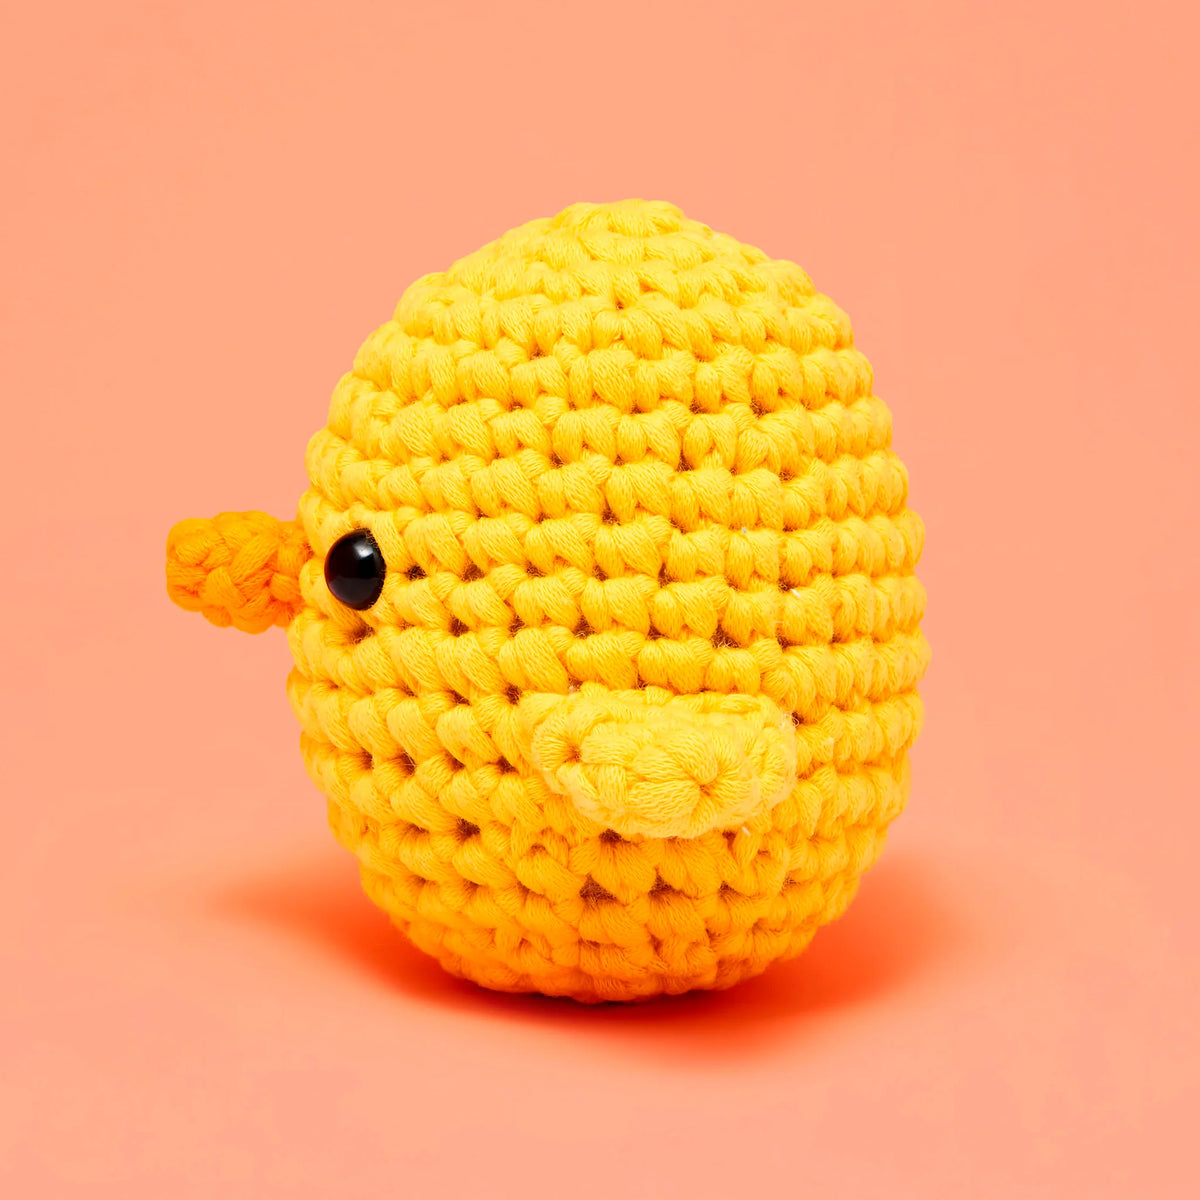 Kiki the Chick - Crochet Kit